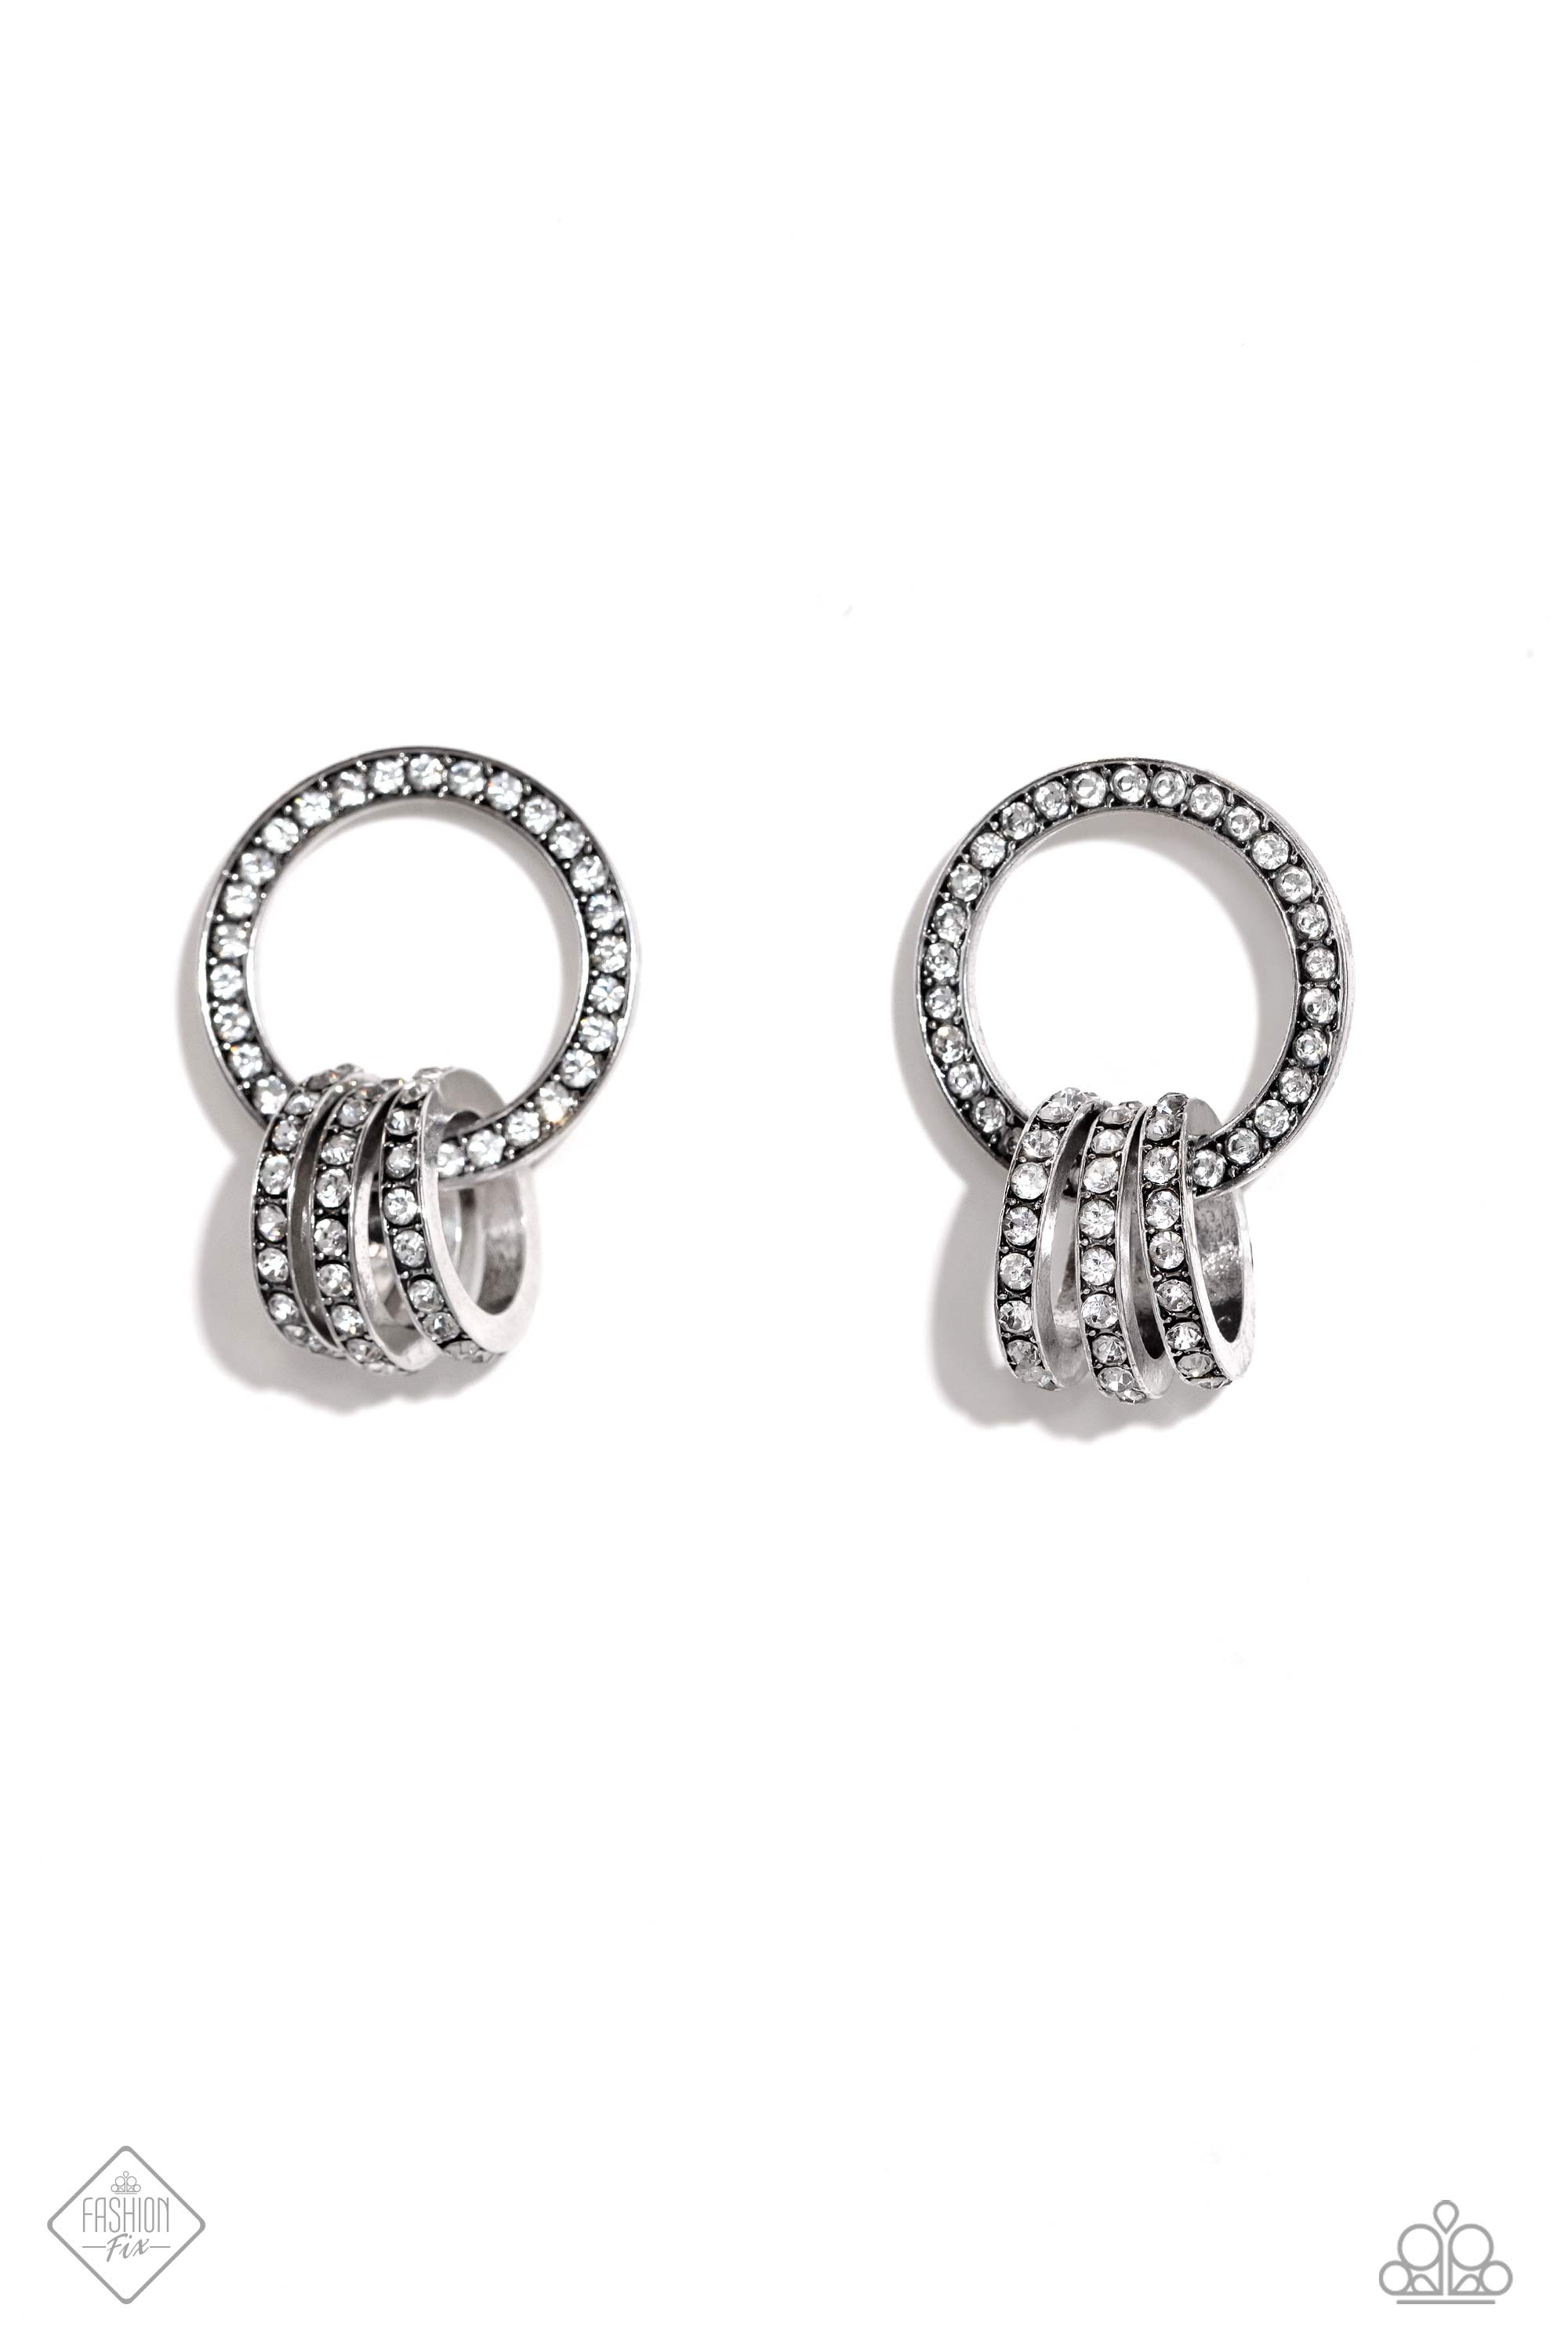 Adorned Allegiance White Rhinestone & Gunmetal Earrings - Paparazzi Accessories- lightbox - CarasShop.com - $5 Jewelry by Cara Jewels